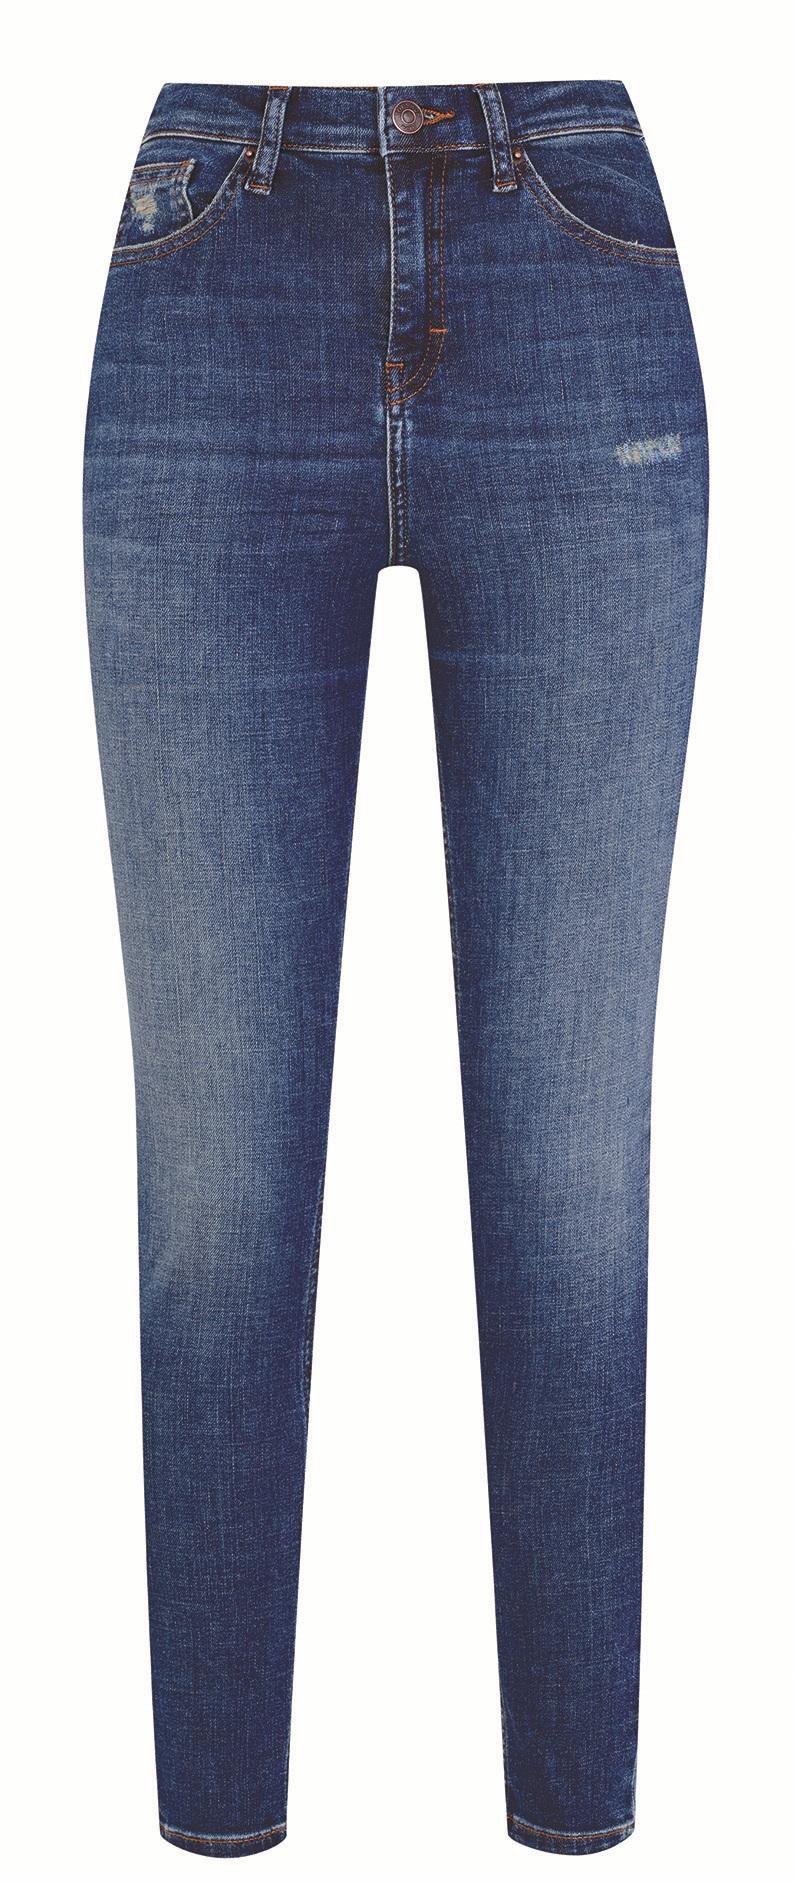 Topshop, High Waist Skinny Jeans, £42